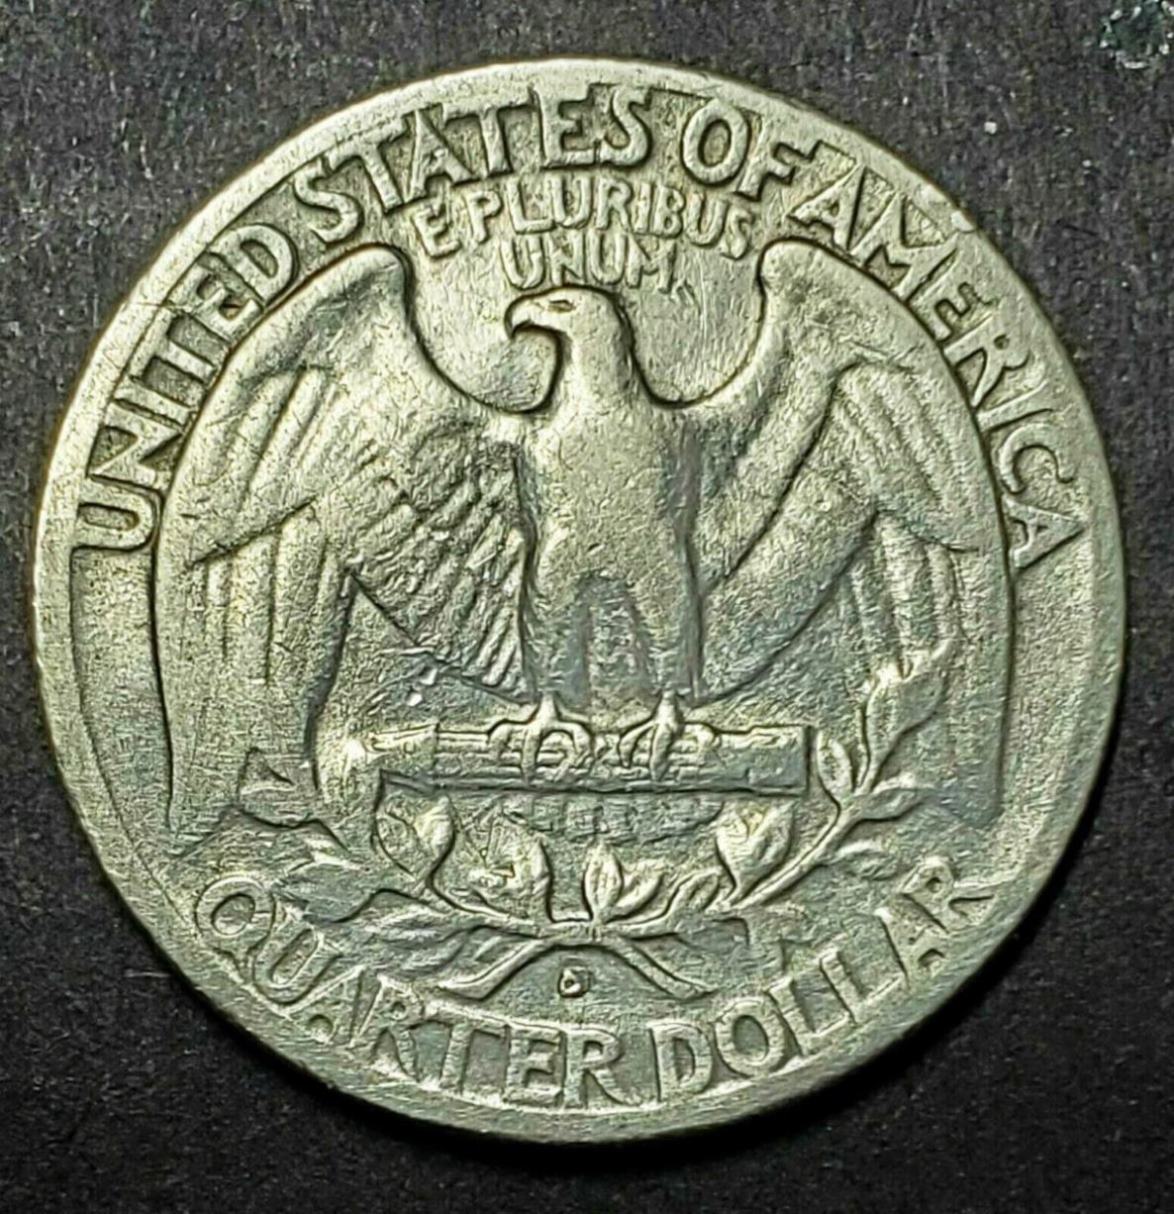 25c-1936-D-Silver-Washington-Quarter-DDO-010420-5-REV.jpg